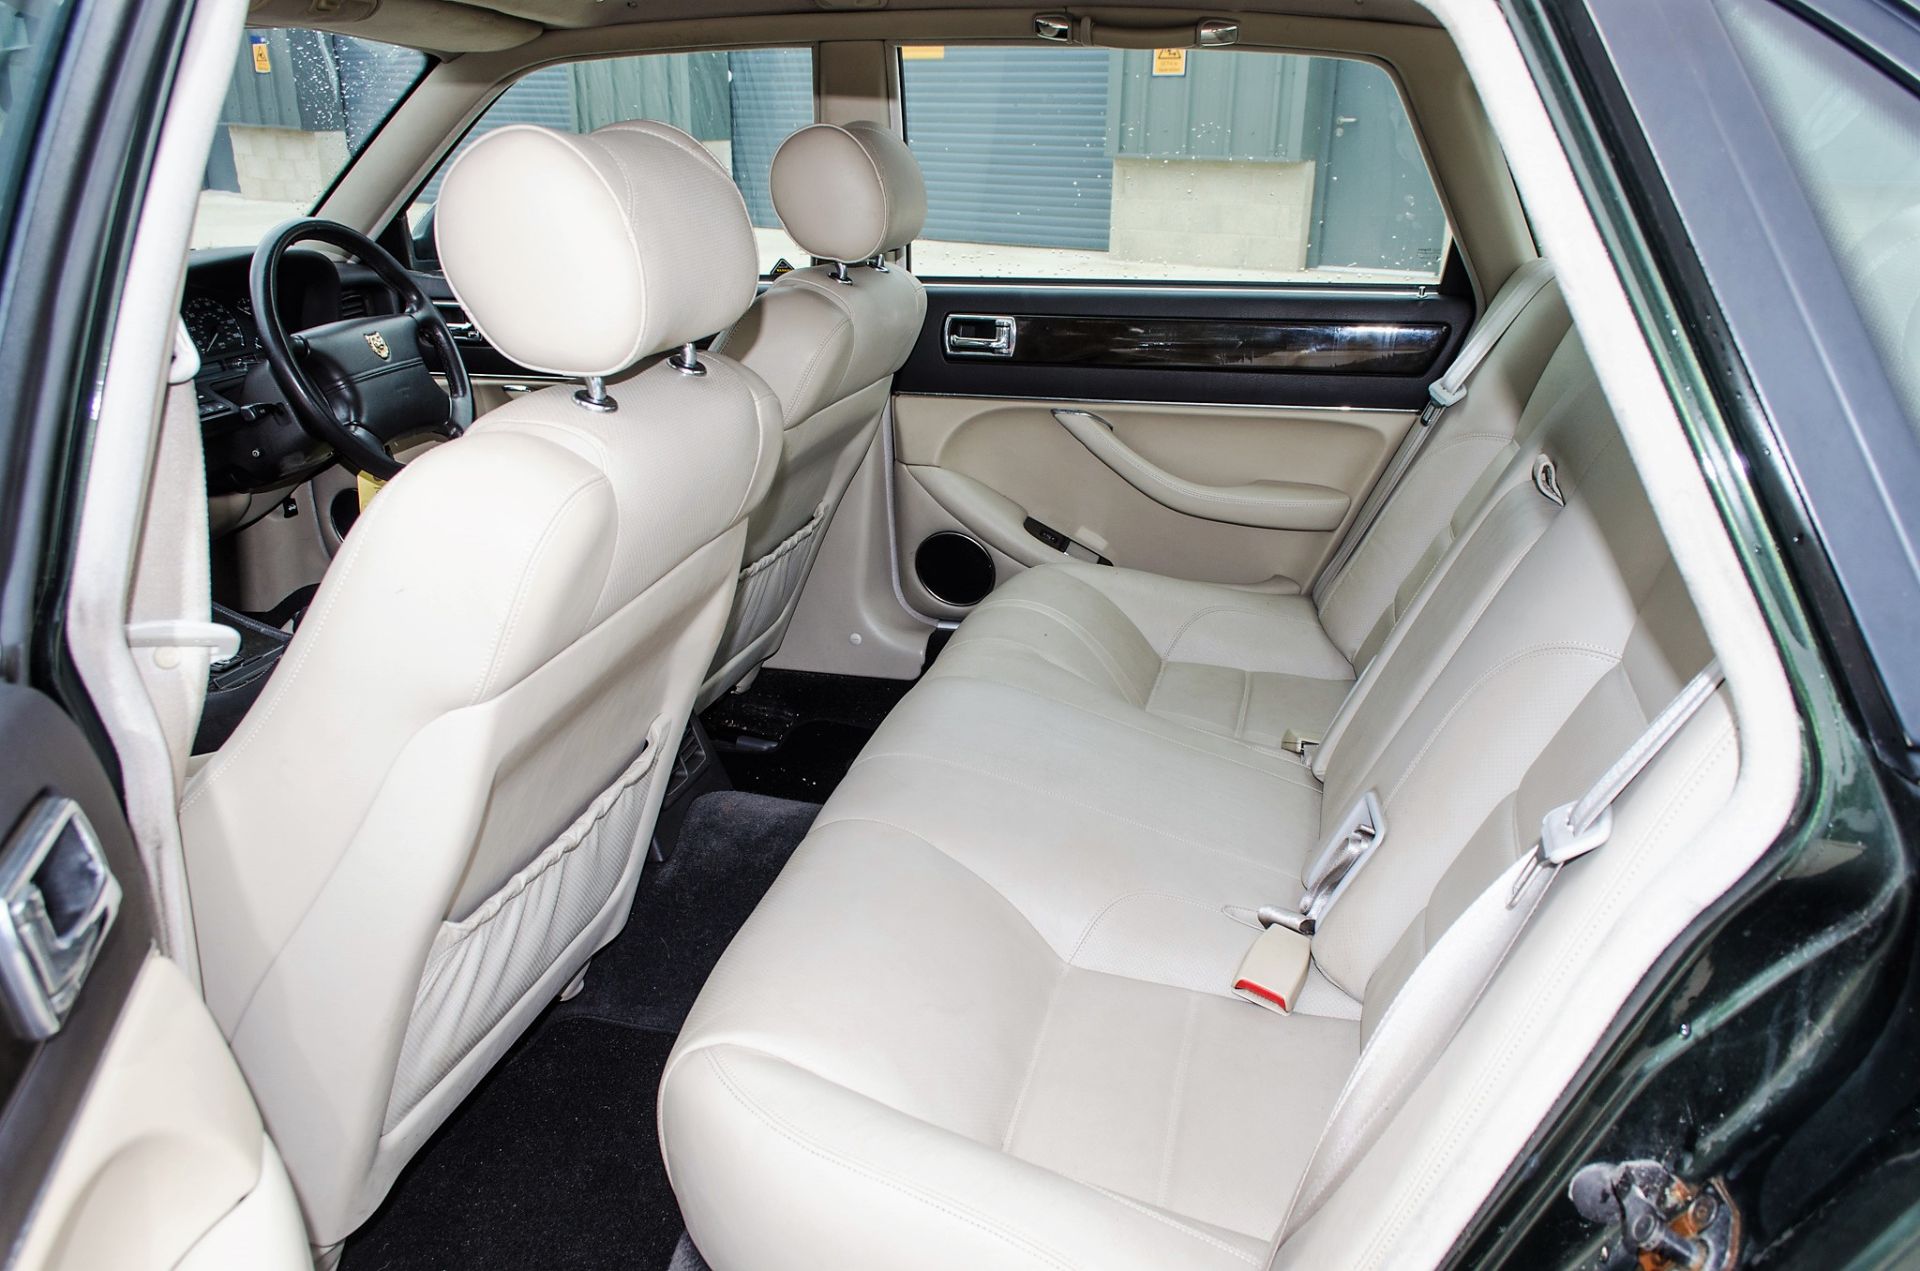 Jaguar XJ6 3.2 Sport petrol automatic 4 door saloon car Registration Number: N586 HUY Date of - Image 21 of 28